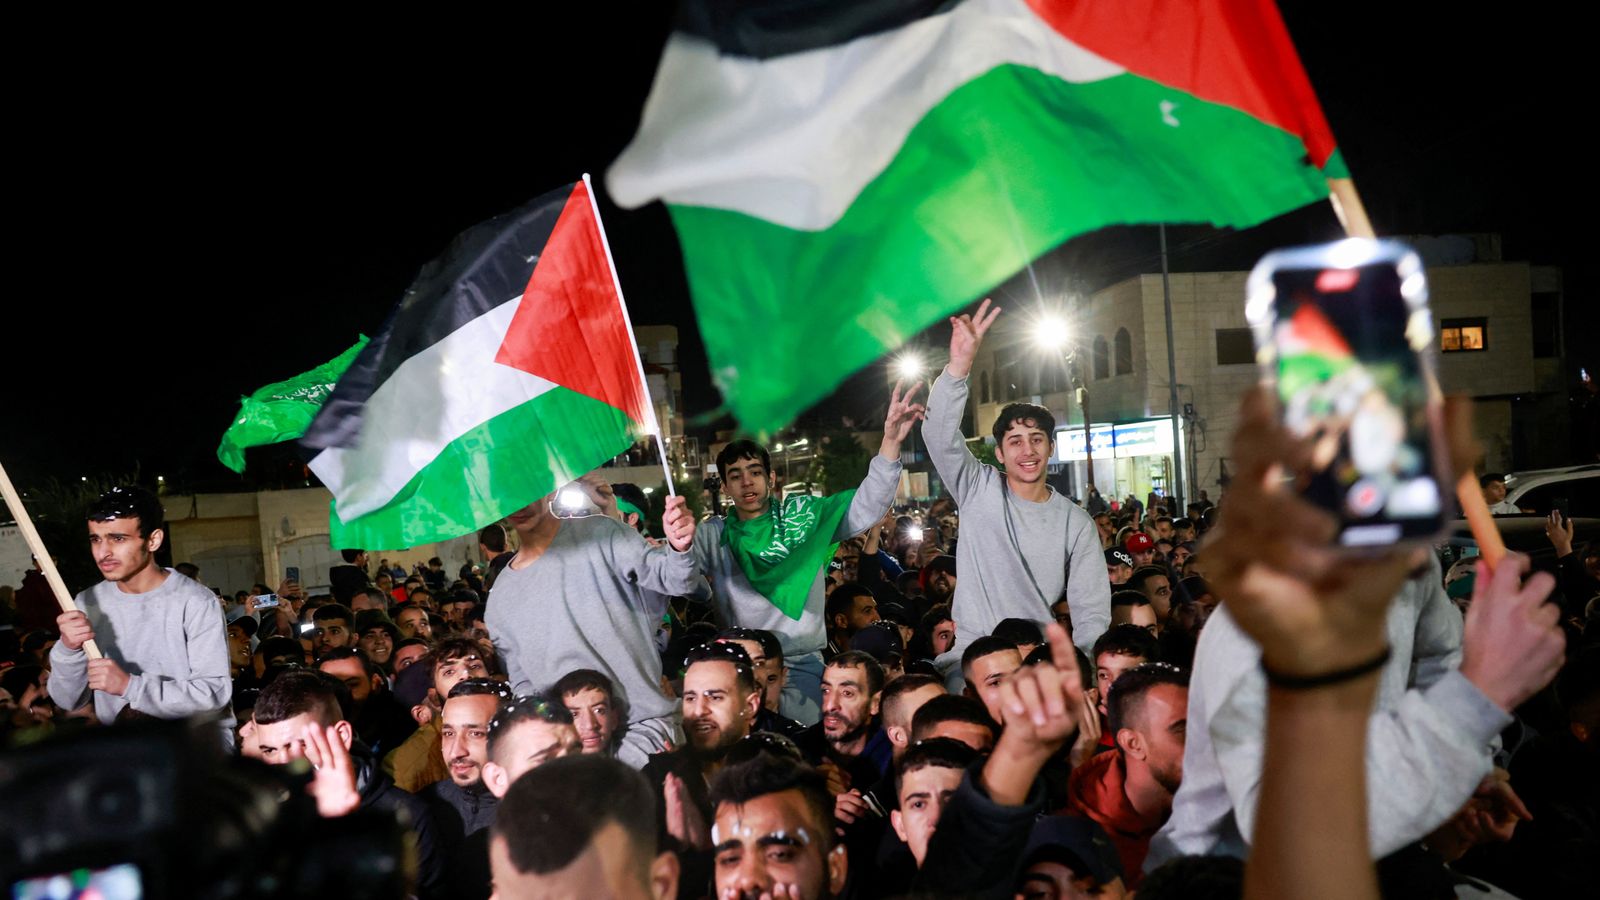 Jubilation in the West Bank in defiance of Israeli orders - as Palestinian prisoners freed